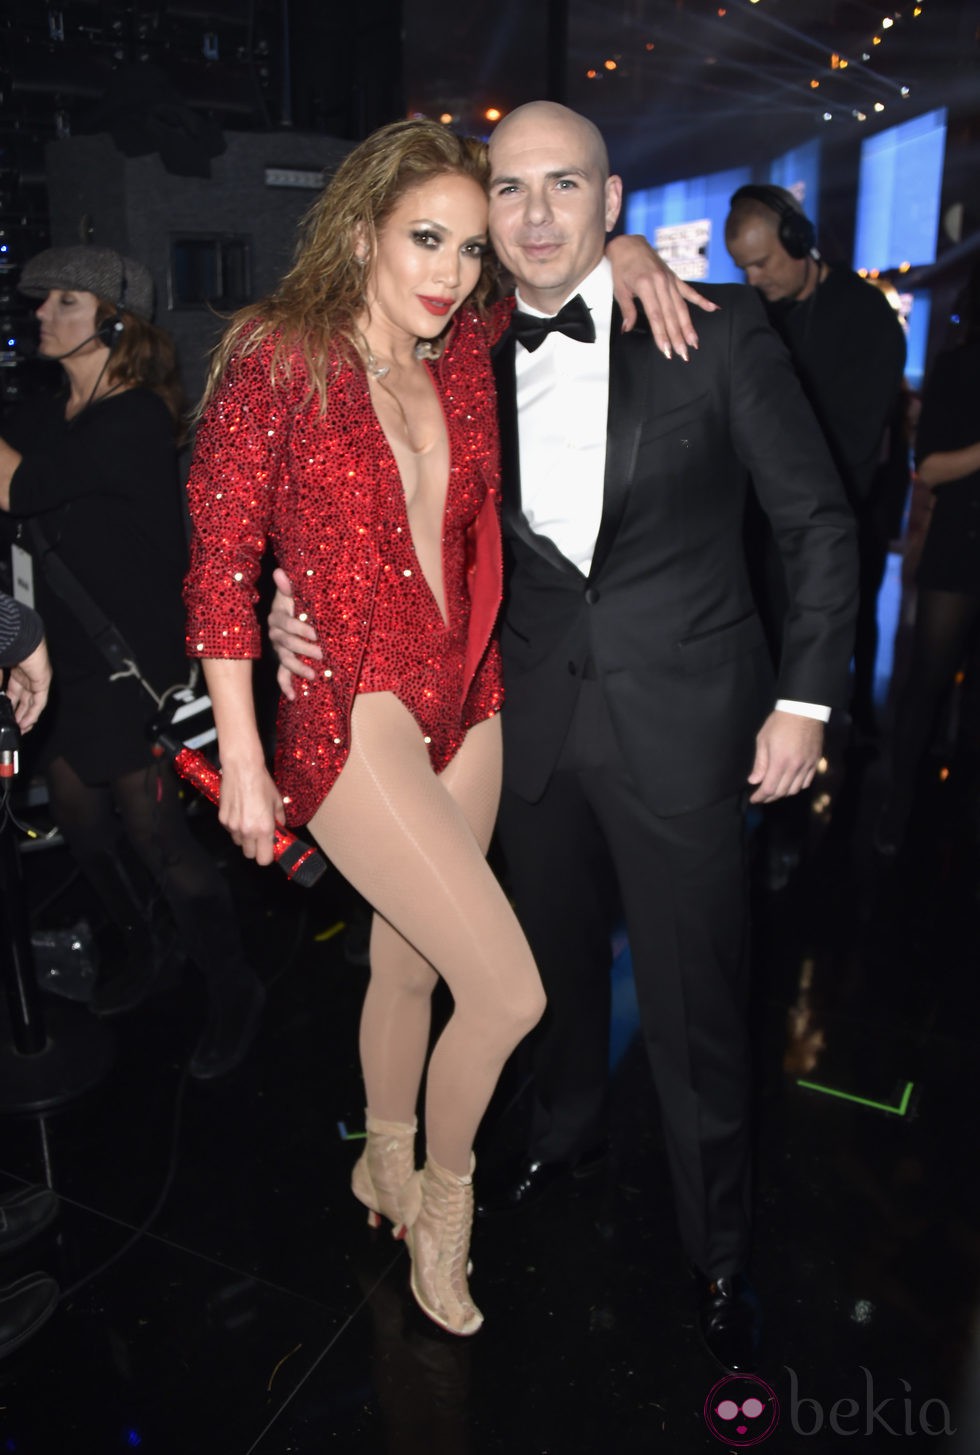 Jennifer Lopez y Pitbull en los American Music Awards 2014